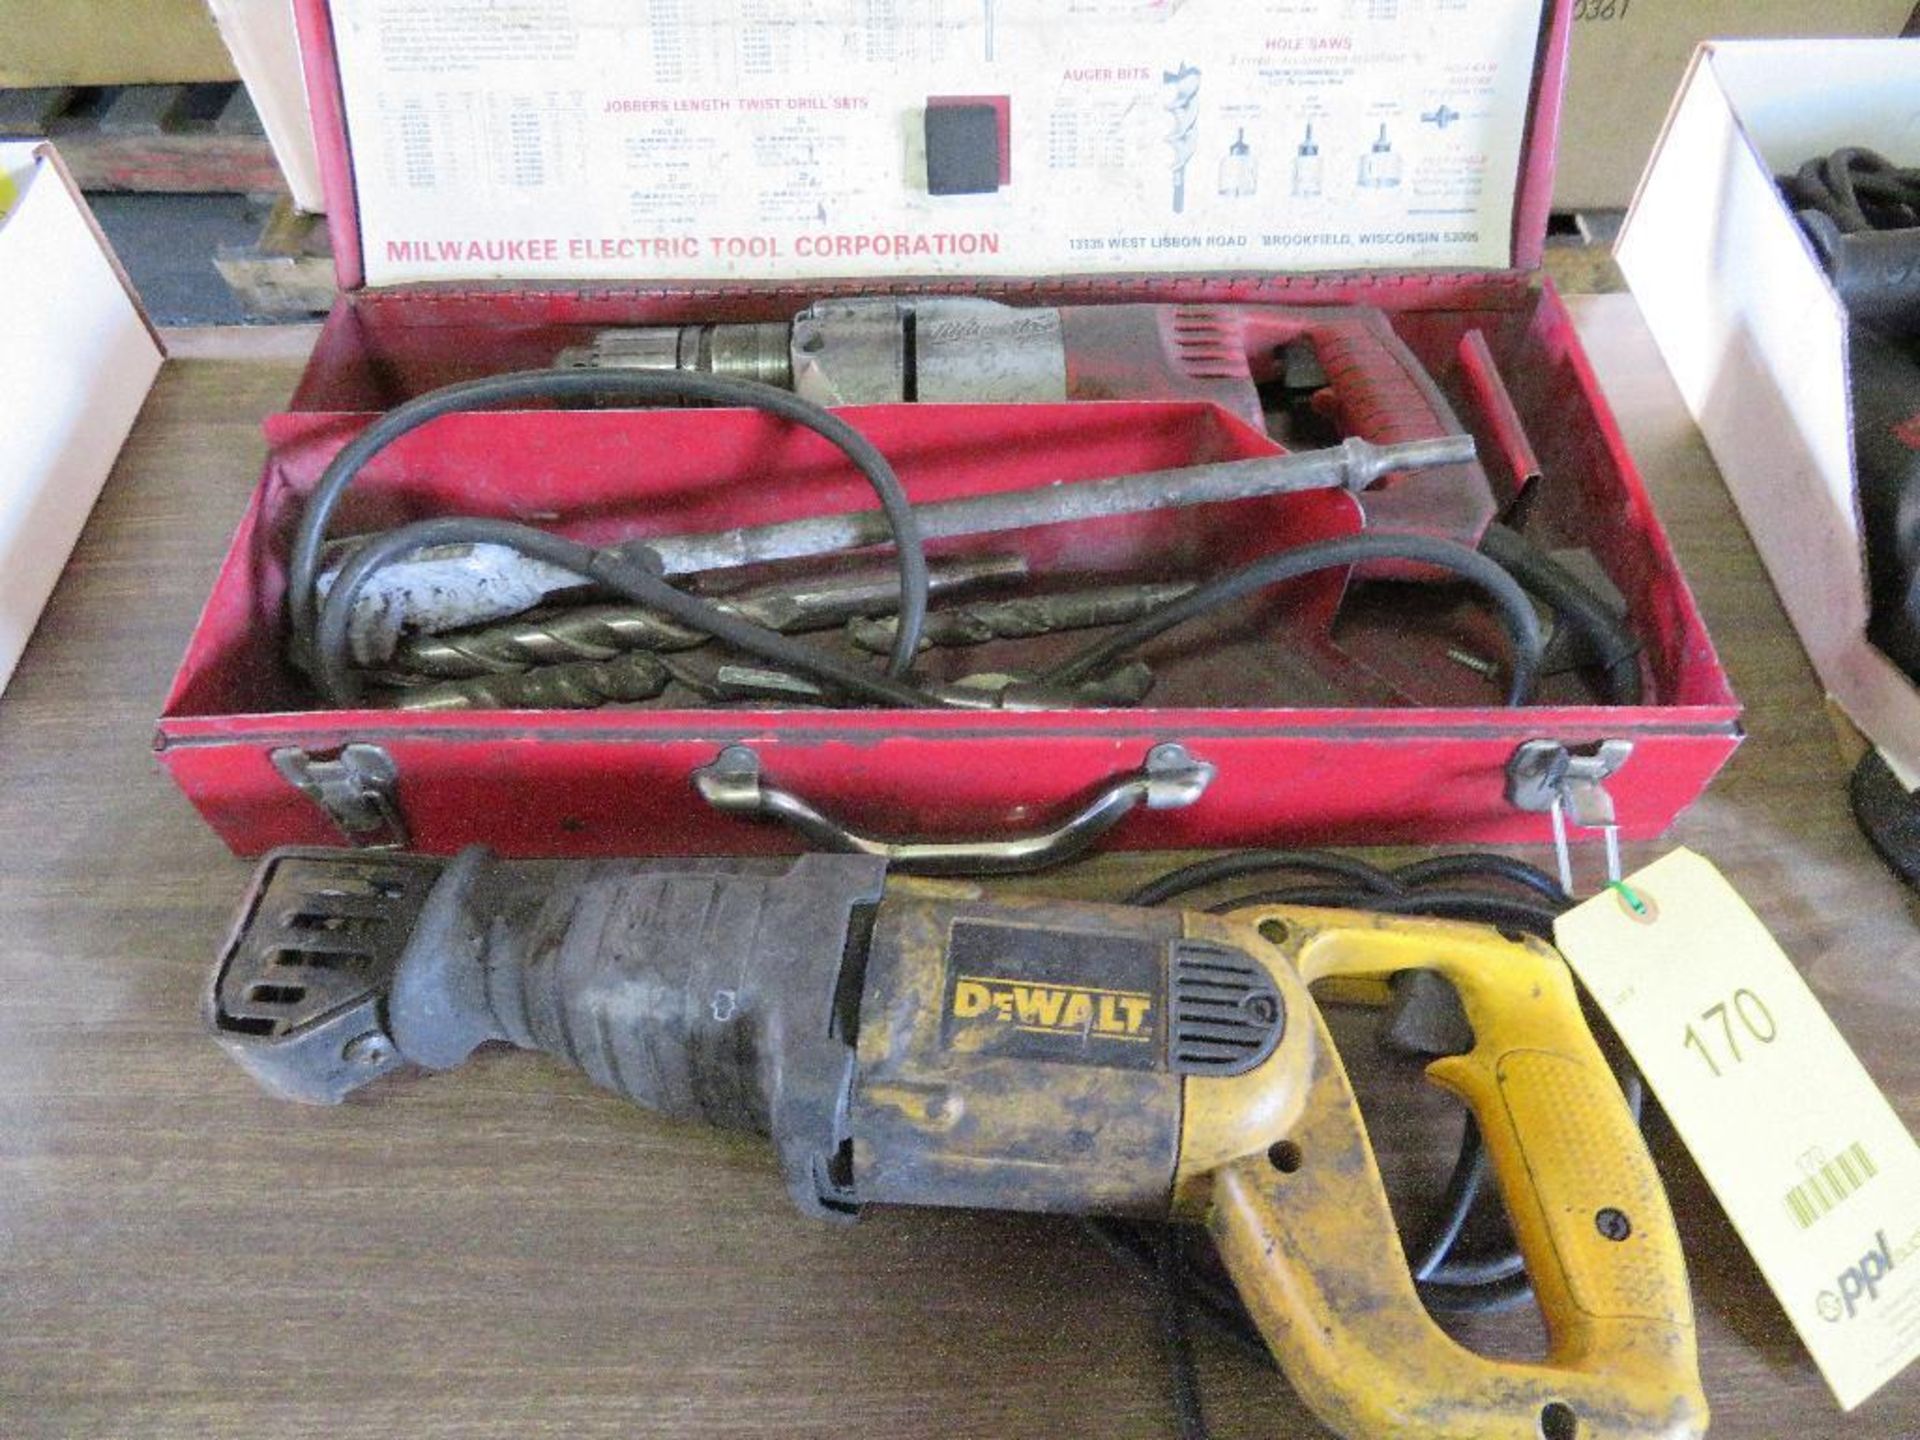 LOT: Milwaukee Hammer Drill, Dewalt Reciprocating Saw